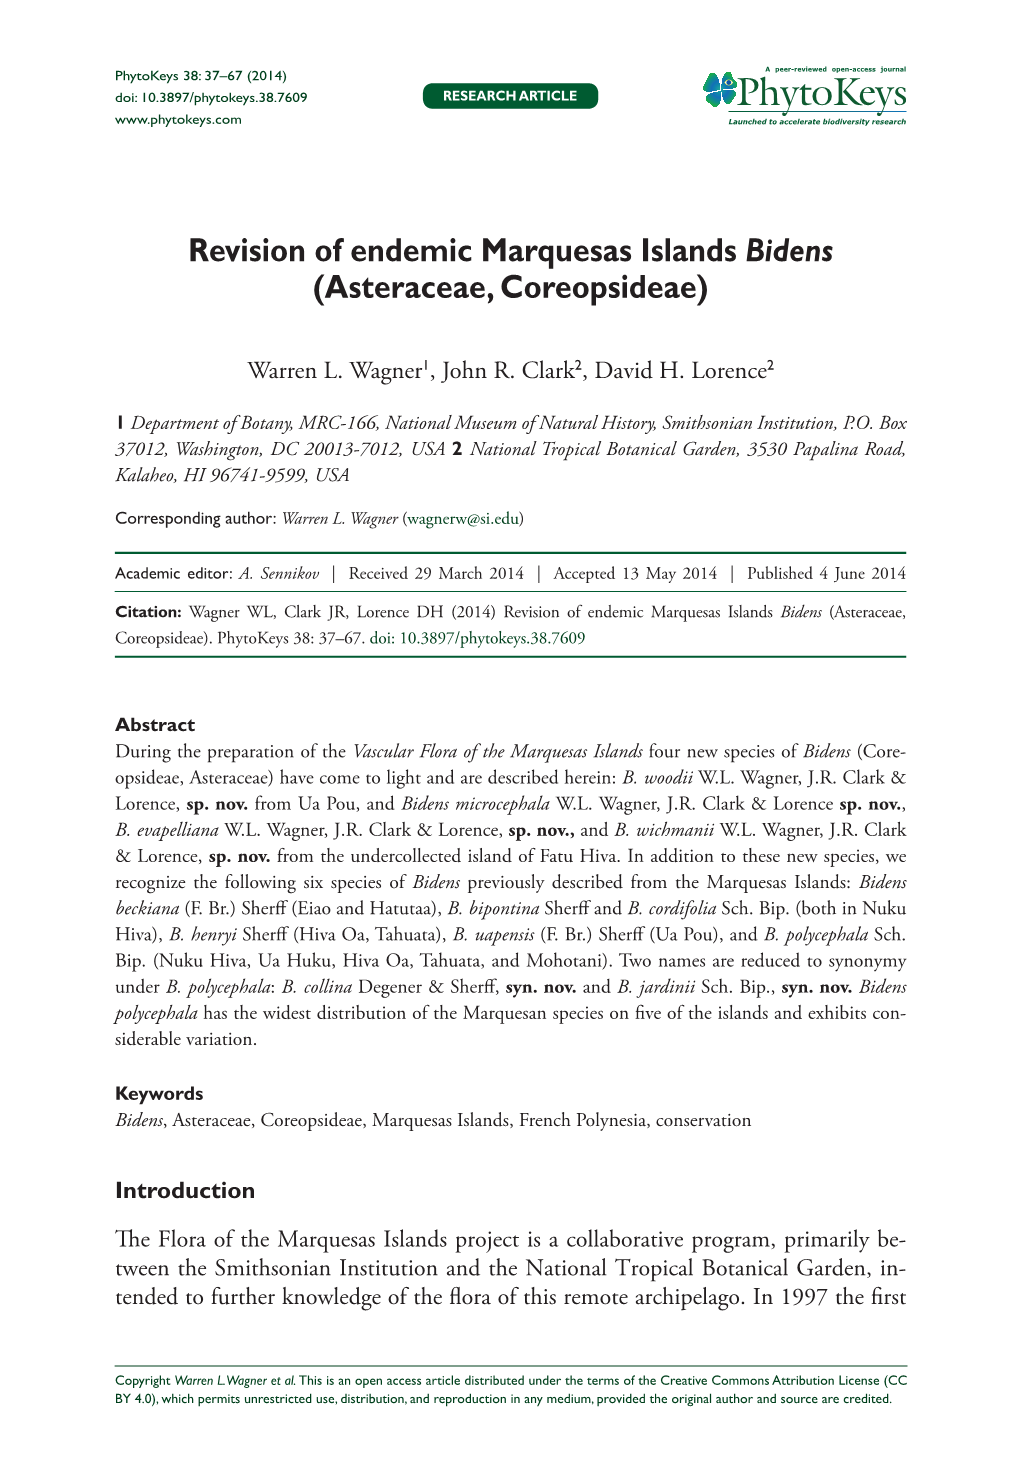 ﻿Revision of Endemic Marquesas Islands Bidens (Asteraceae